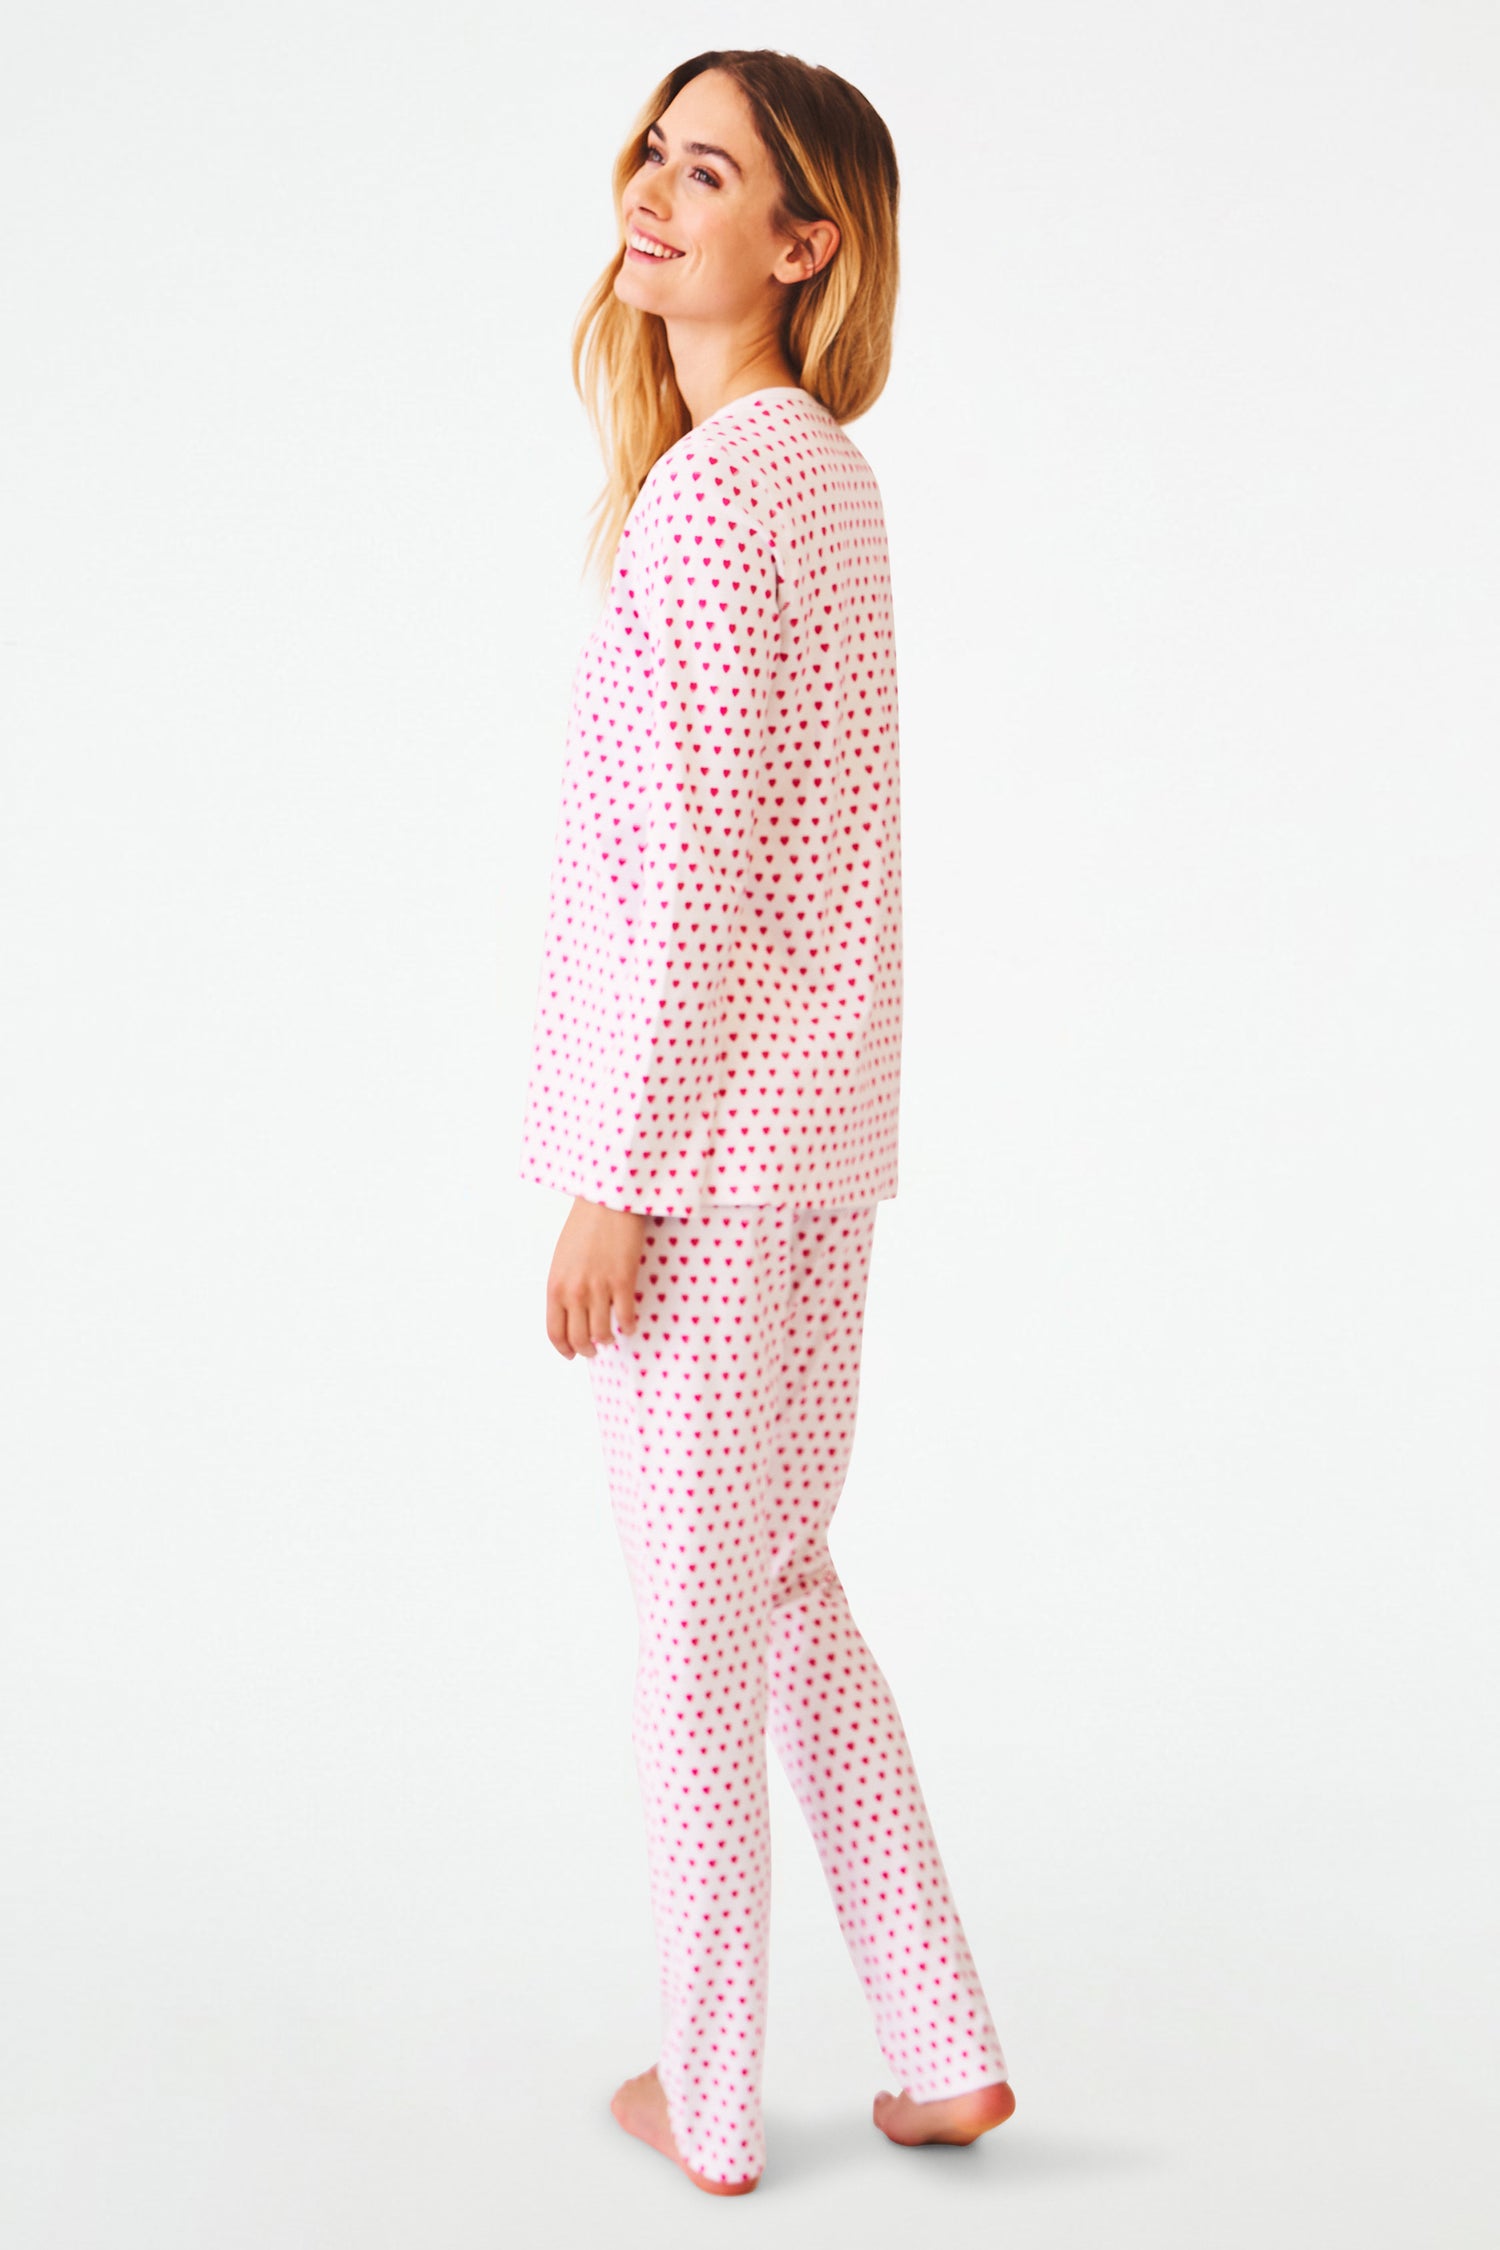 Roller Rabbit Pink Hearts Pajamas